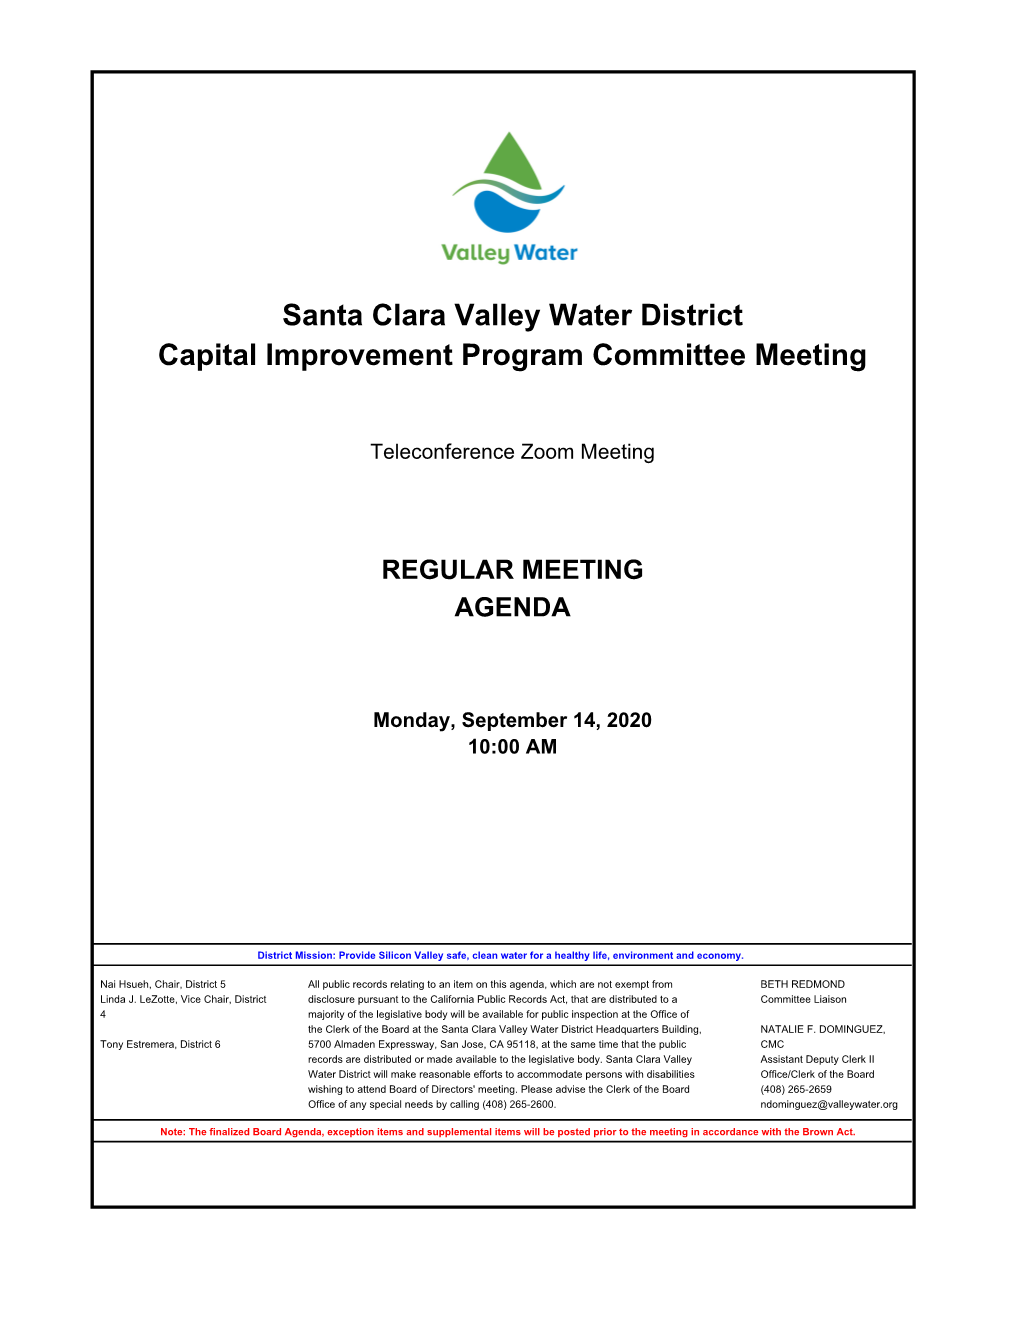 Santa Clara Valley Water District Capital Improvement Program Committee Meeting